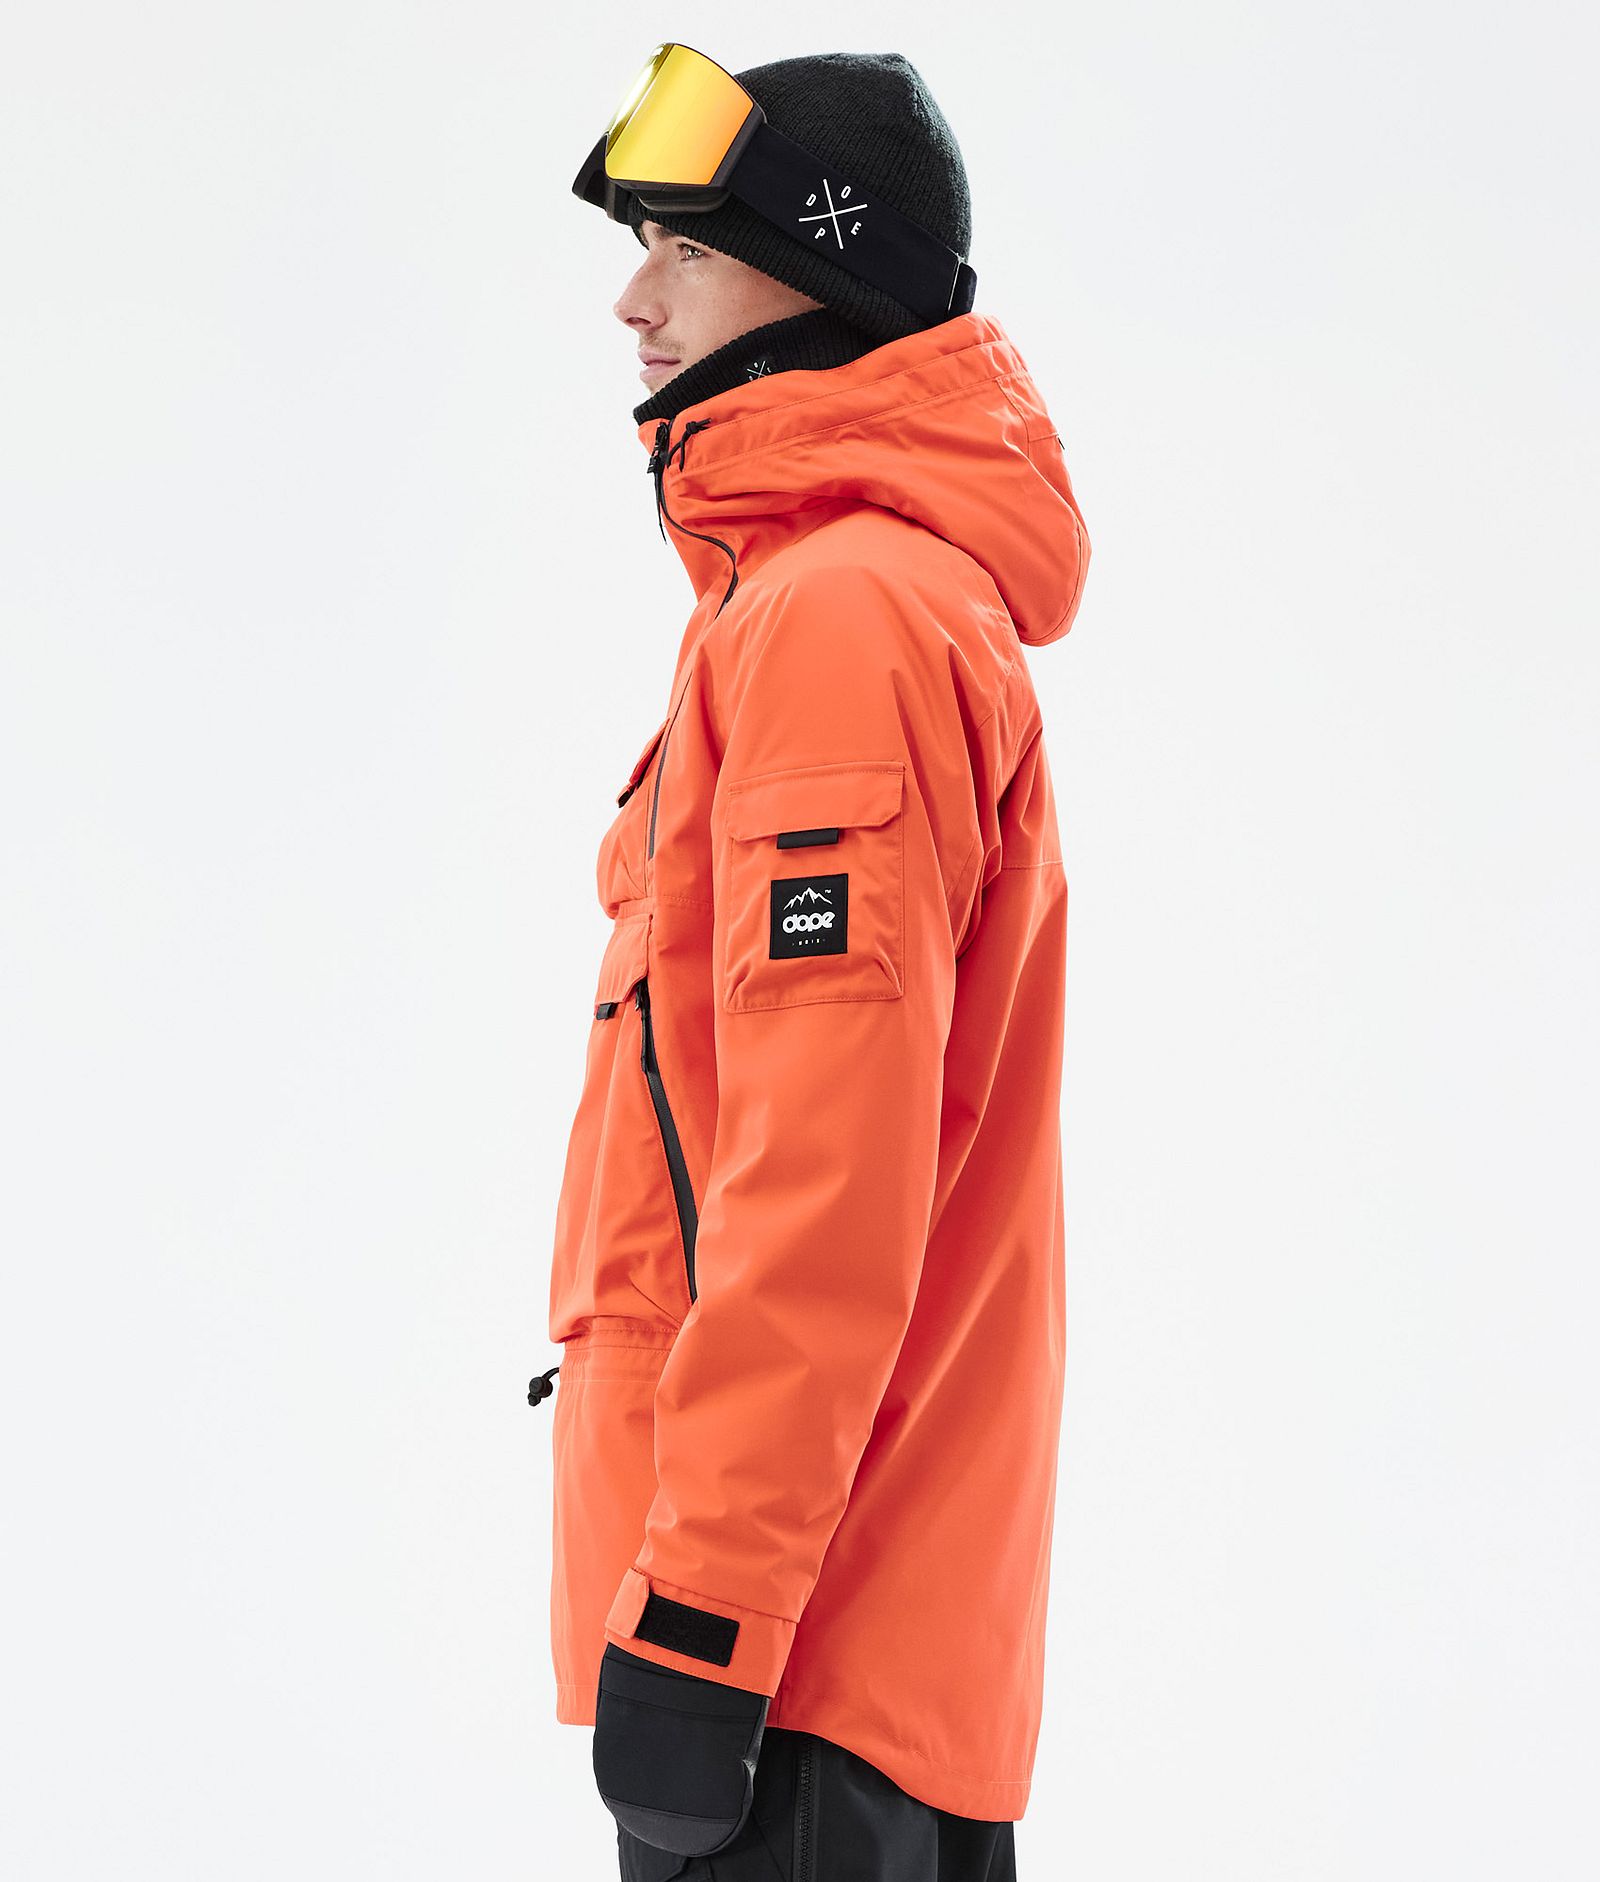 Akin スキージャケット メンズ Orange